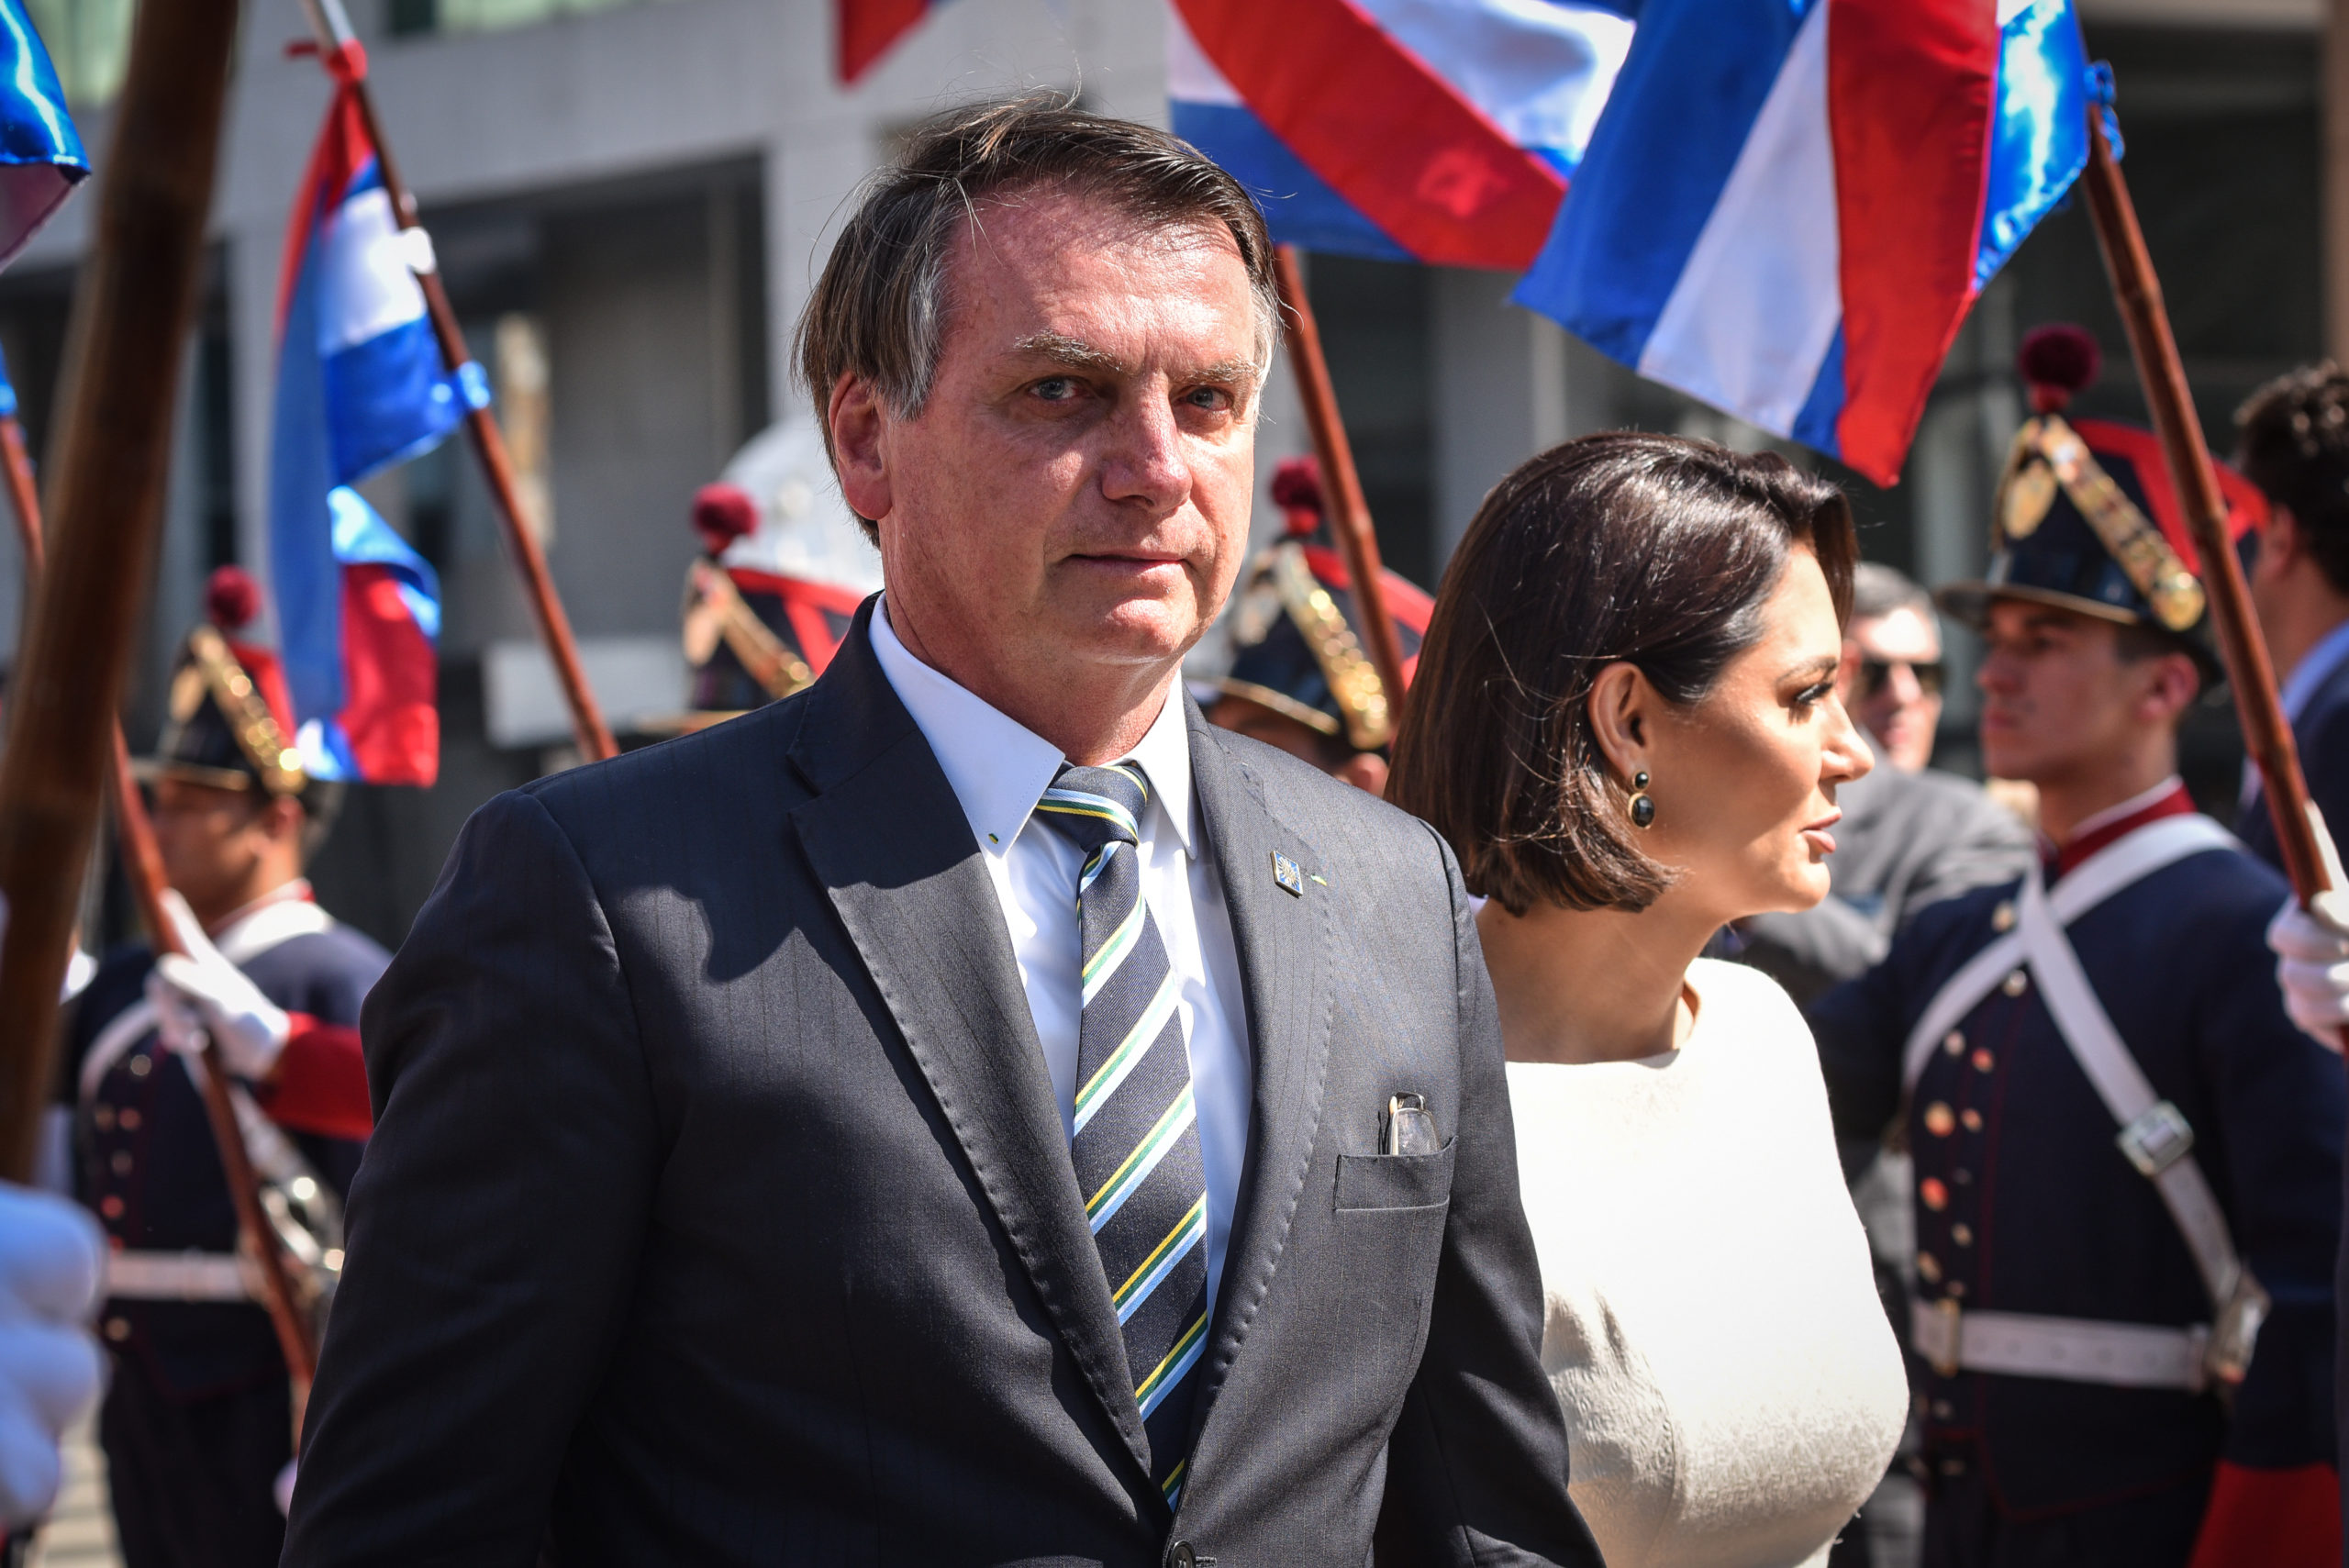 President of Brazil Jair Bolsonaro, along with his wife Michelle Bolsonaro